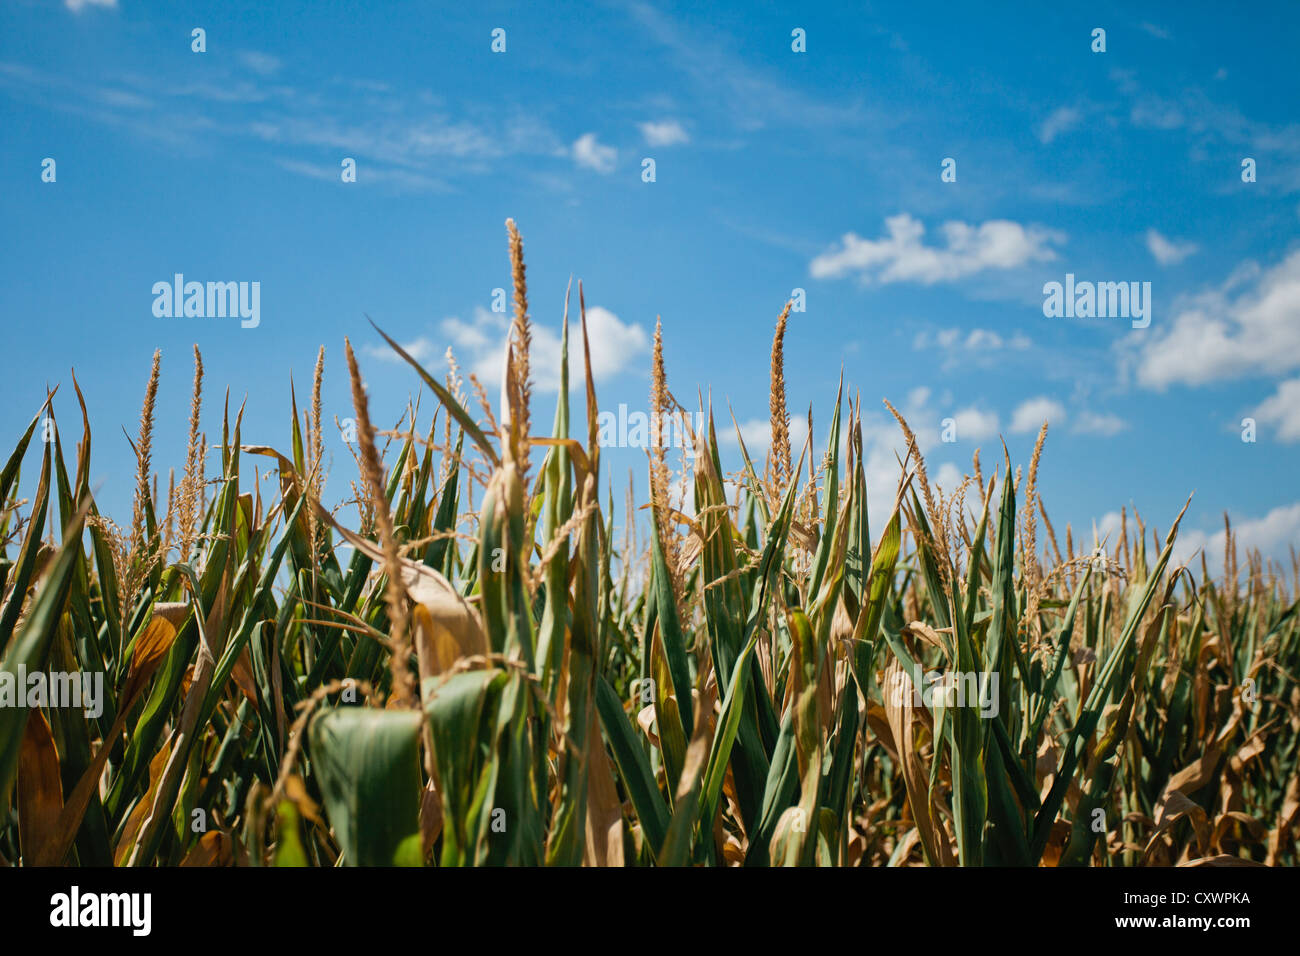 Corn field under blue sky Stock Photo